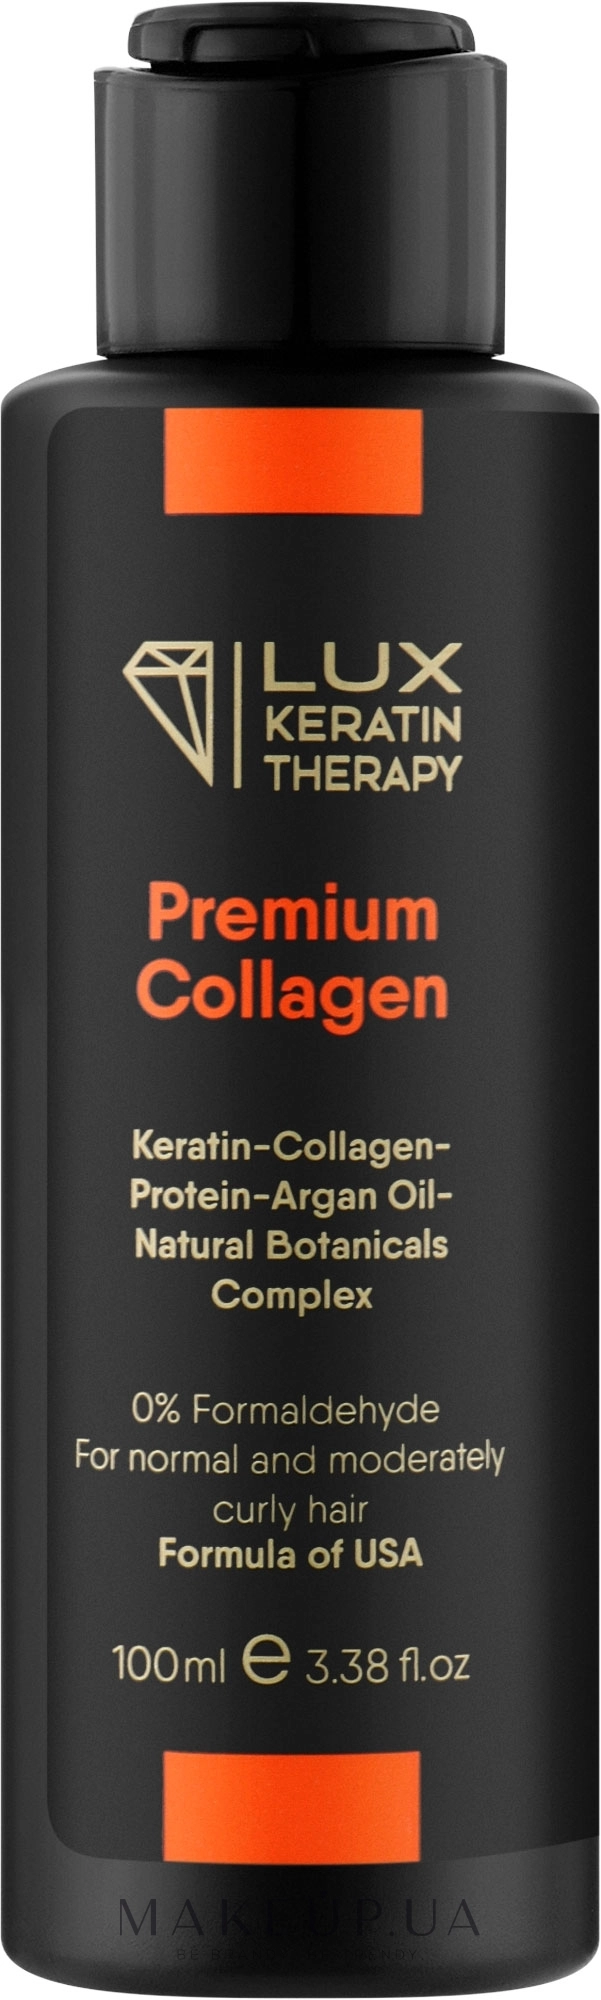 Средство для выпрямления волос - Lux Keratin Therapy Premium Collagen, 100 мл - фото N1